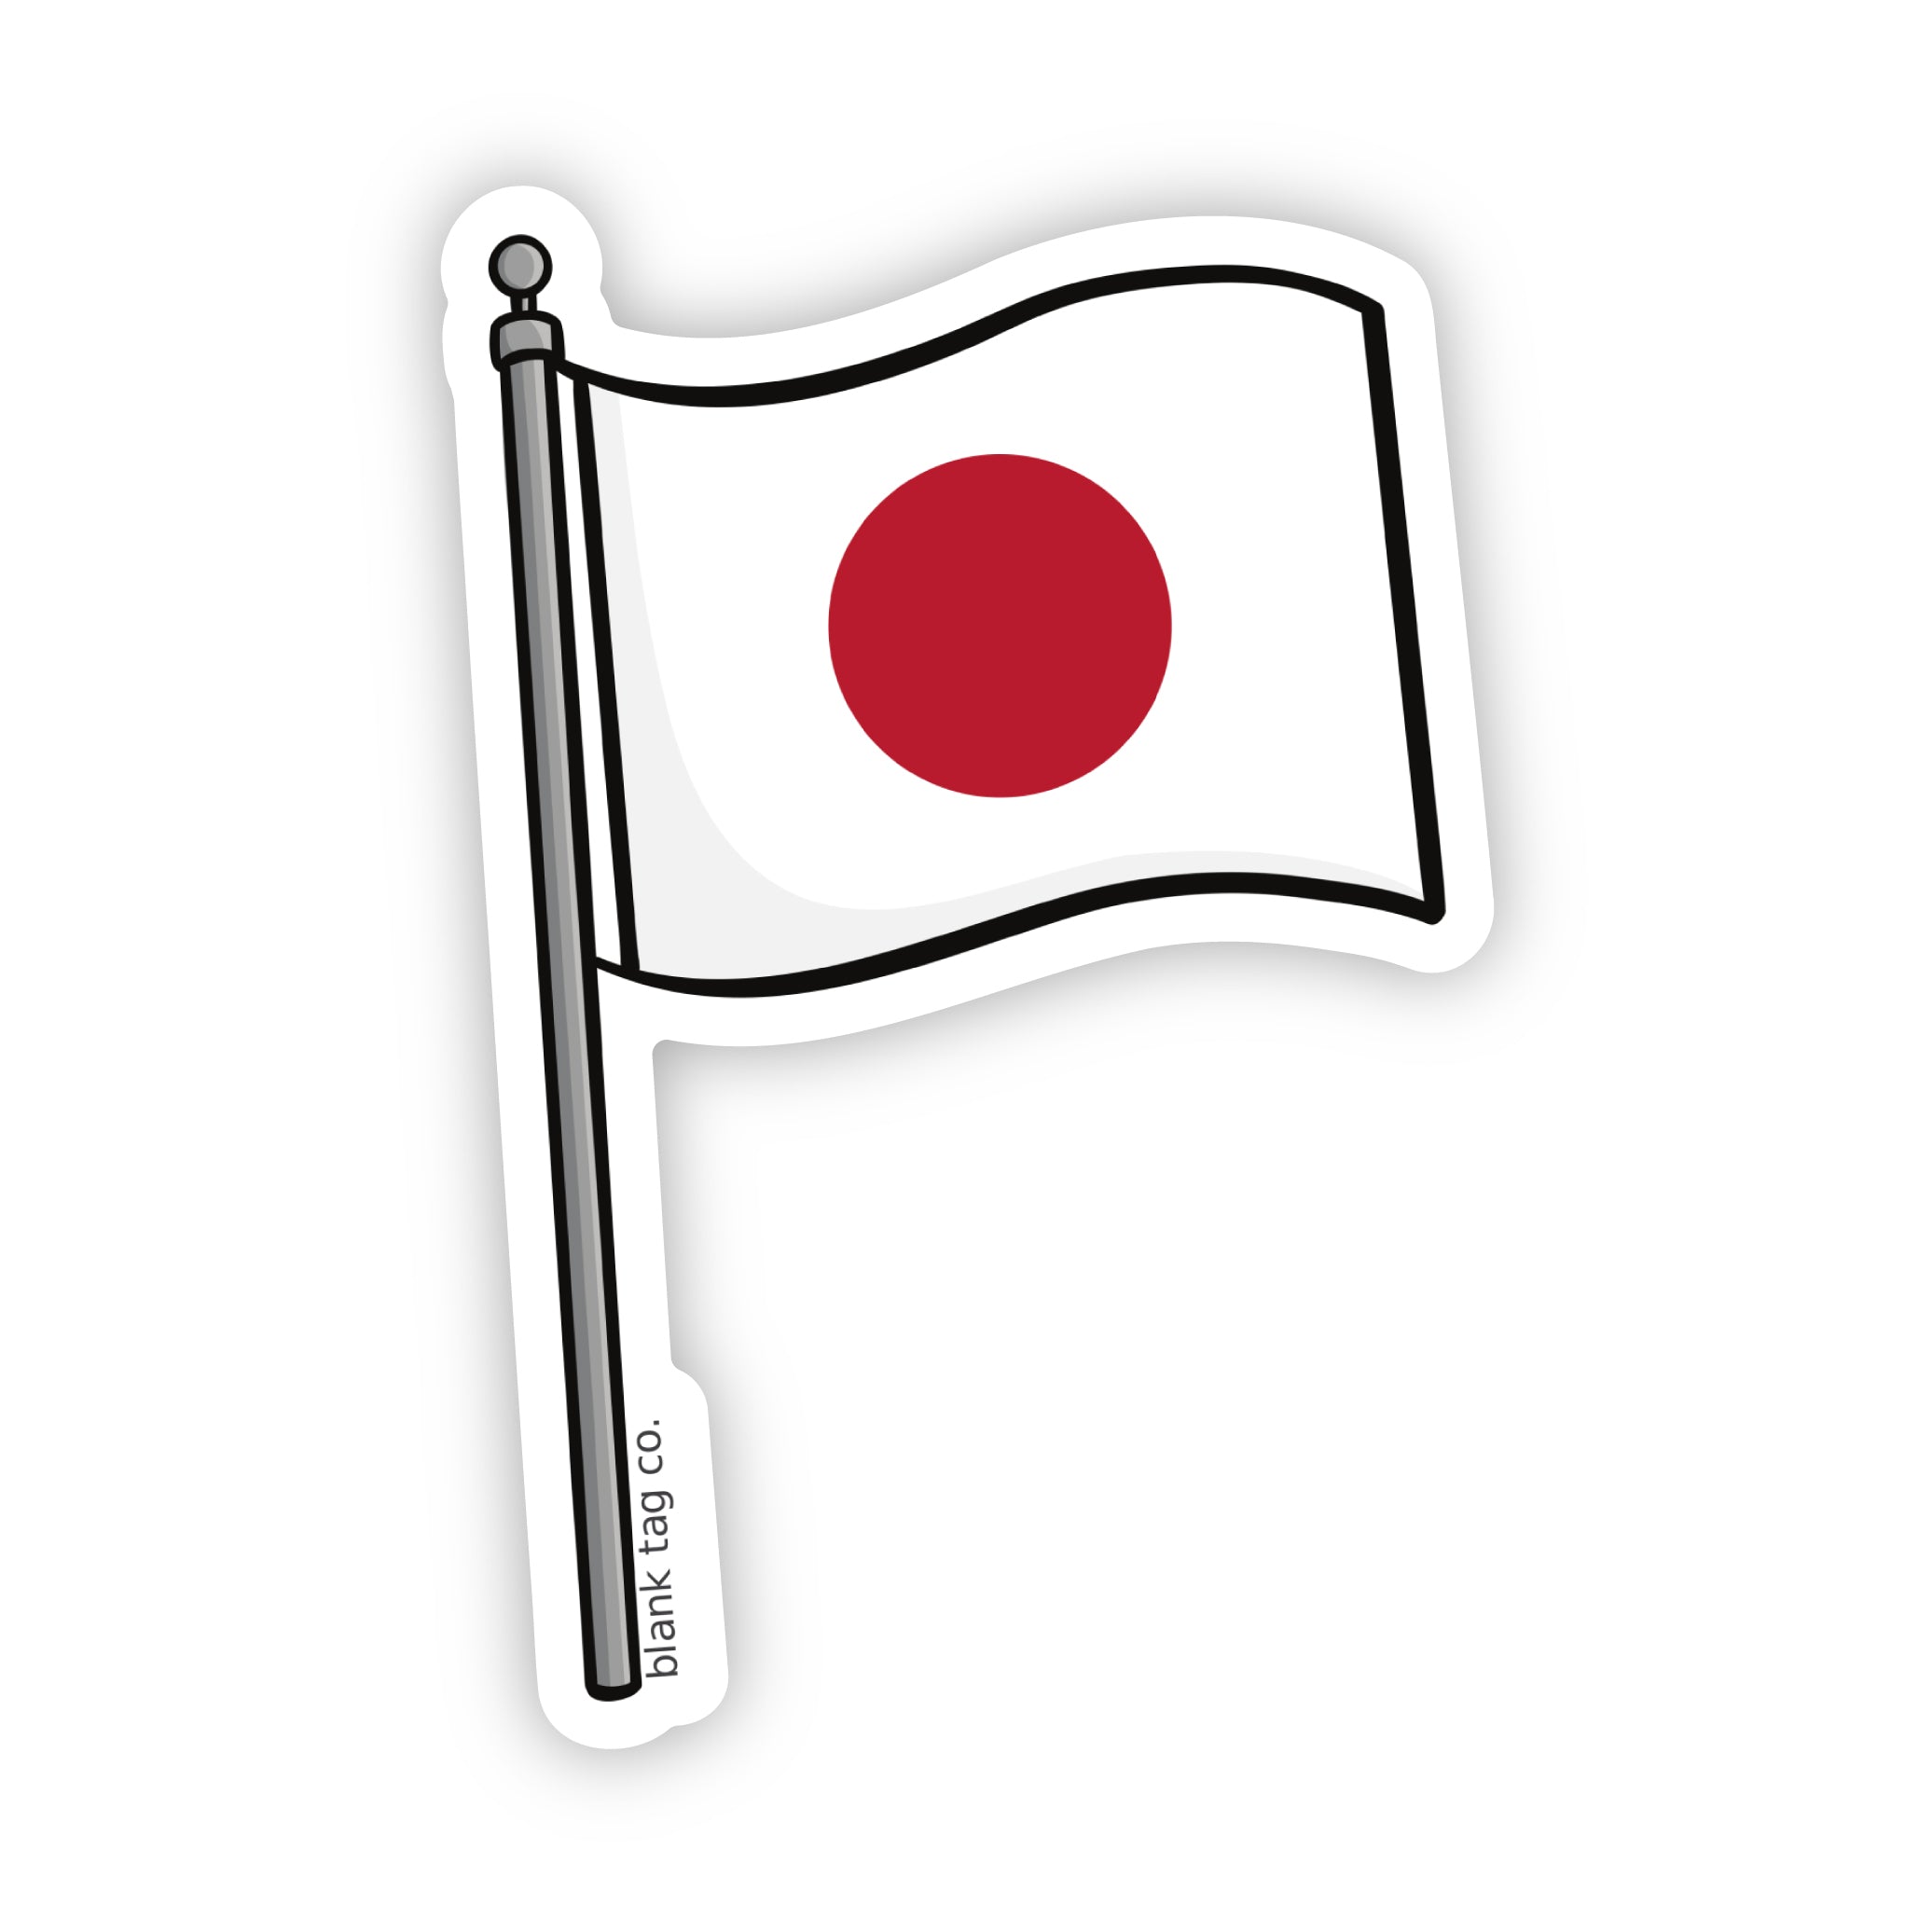 The Japan Flag Sticker